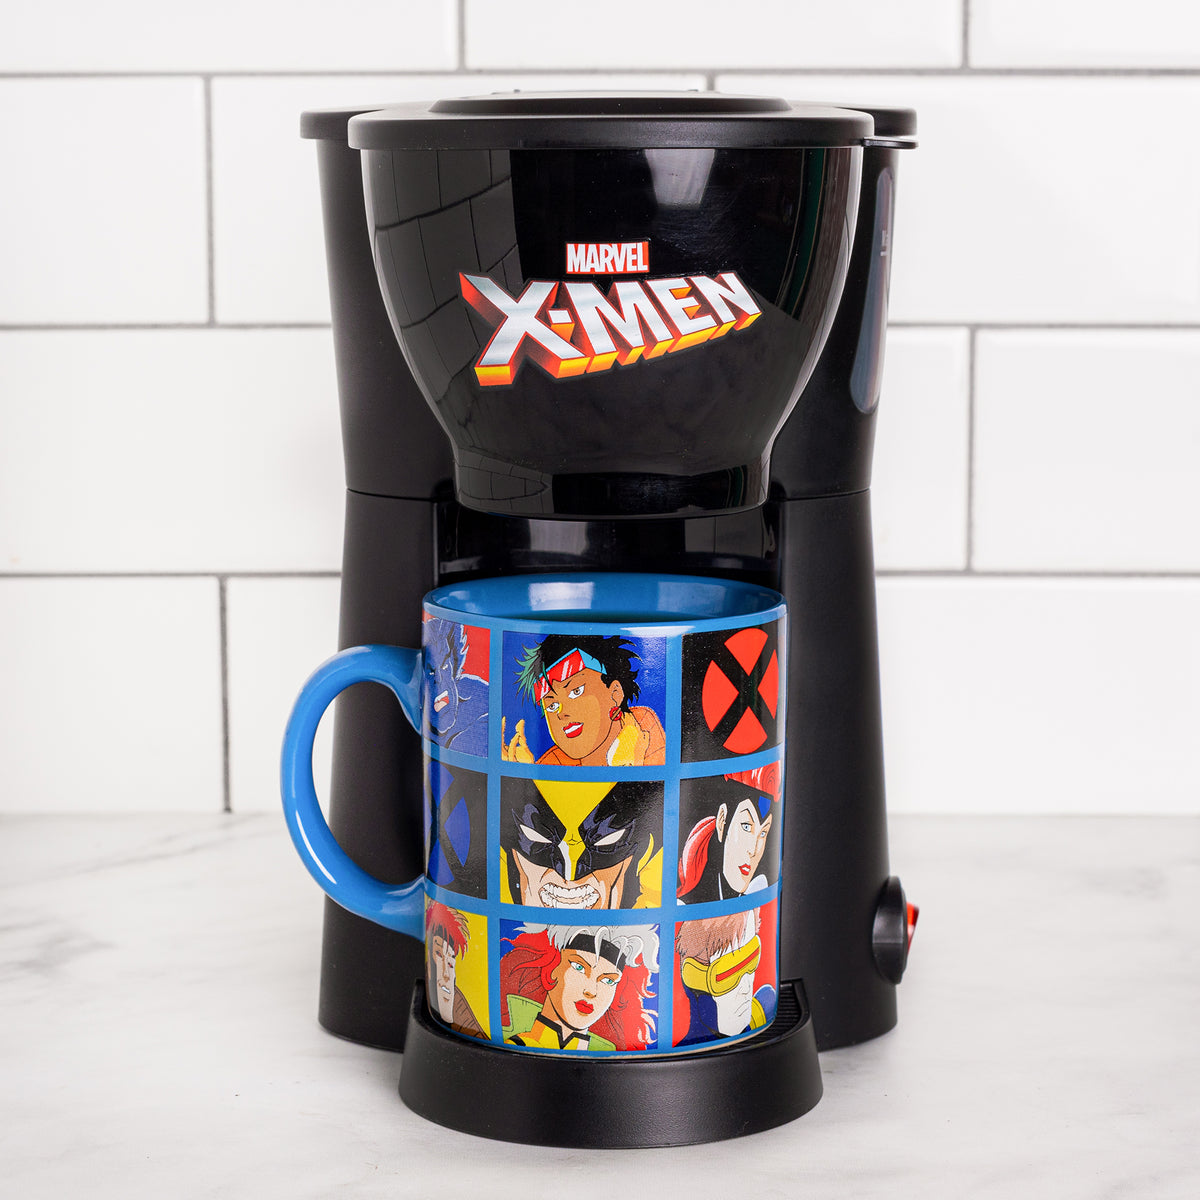 Marvel X-Men Coffee Maker Set